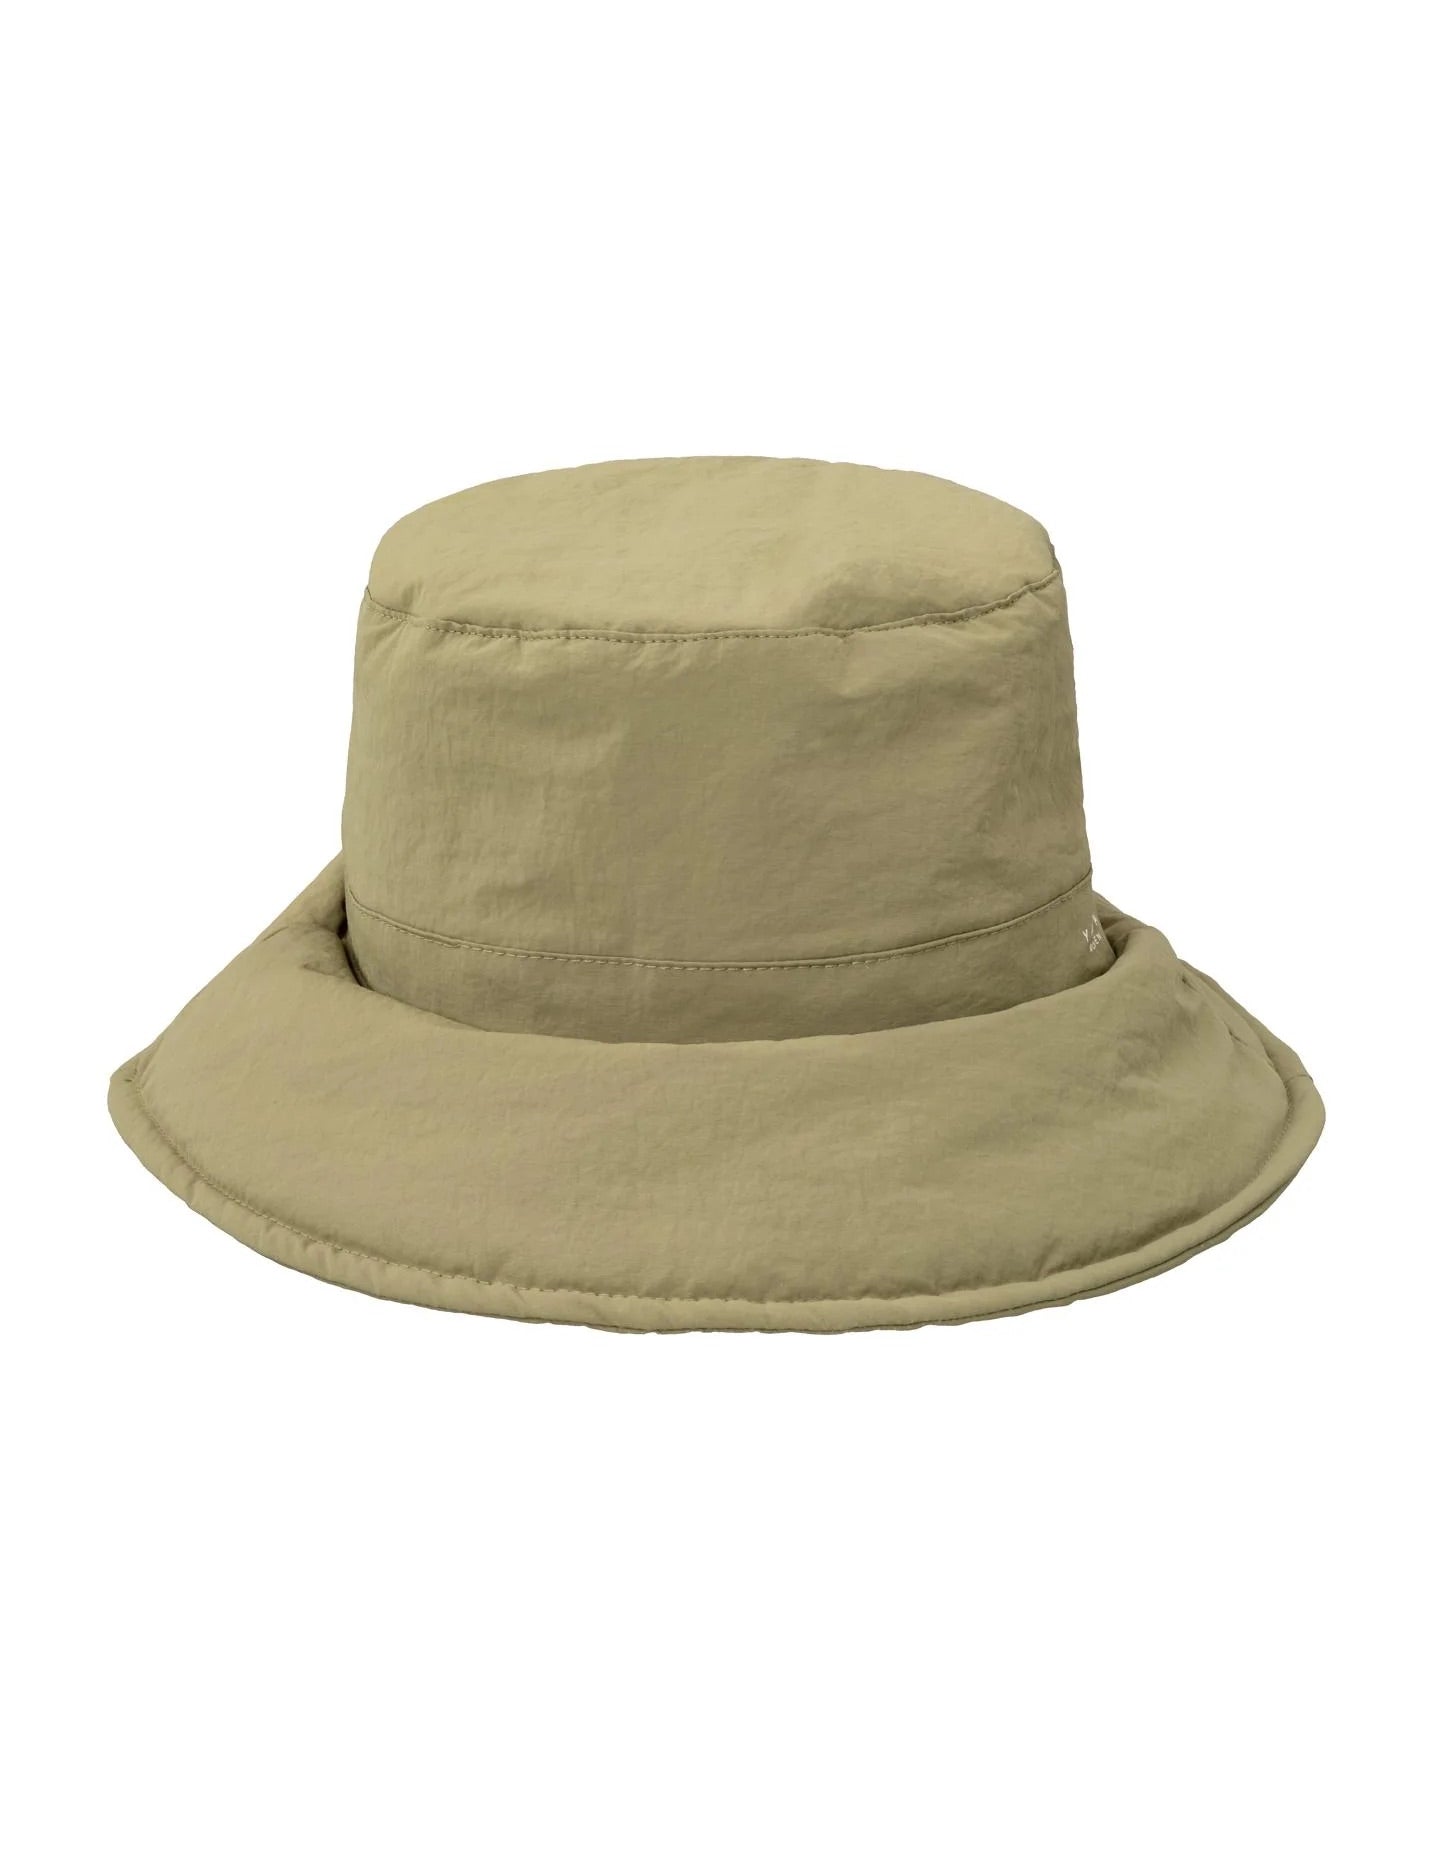 nylon-bucket-hat-reversible-eucalyptus-green_2880x_jpg.jpg